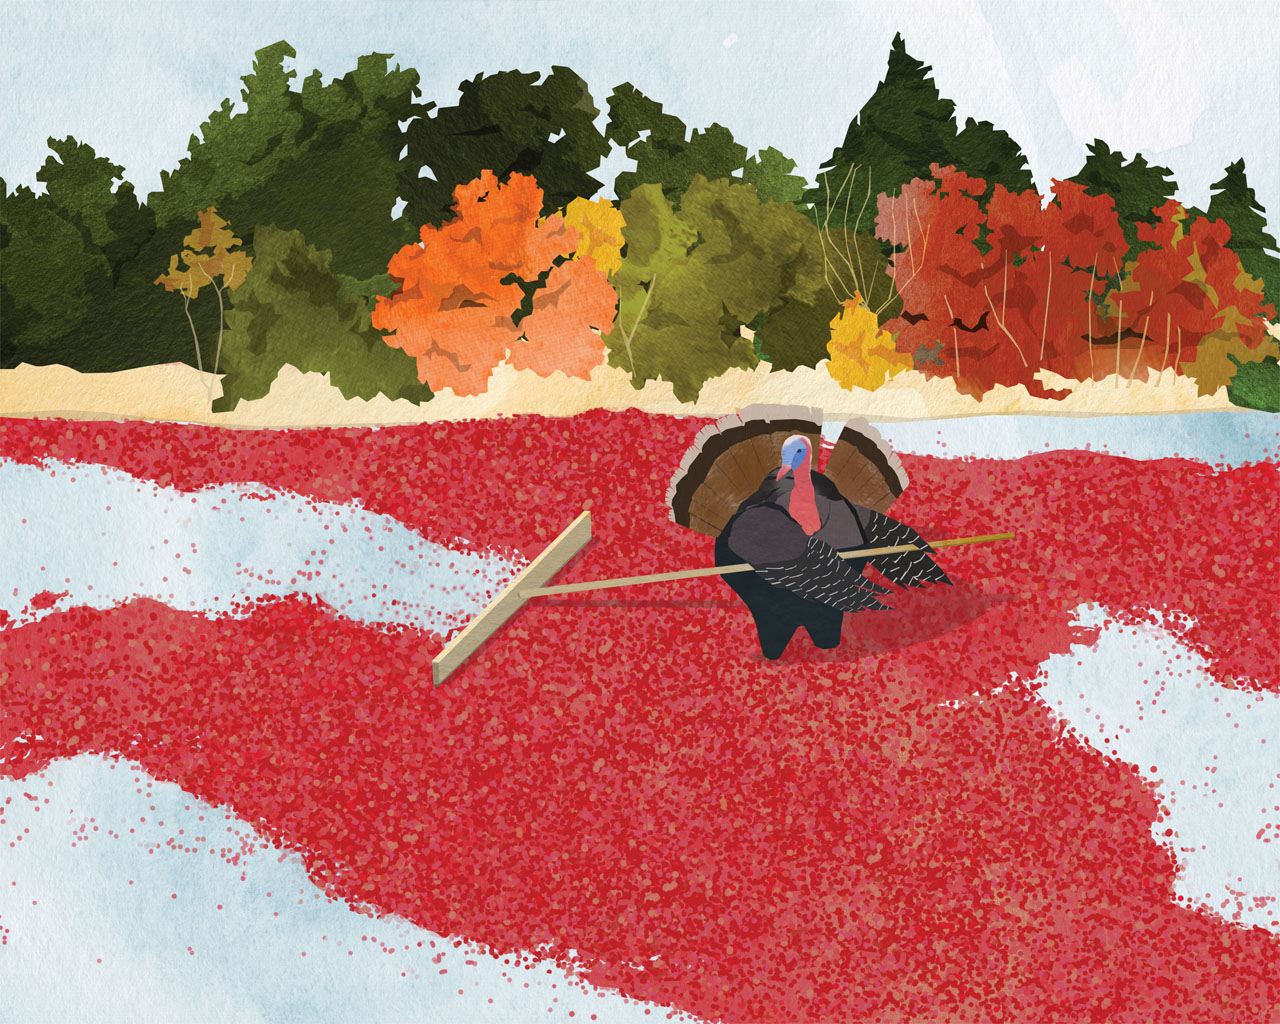 tram nguyen turkey cranberries saveur illustration